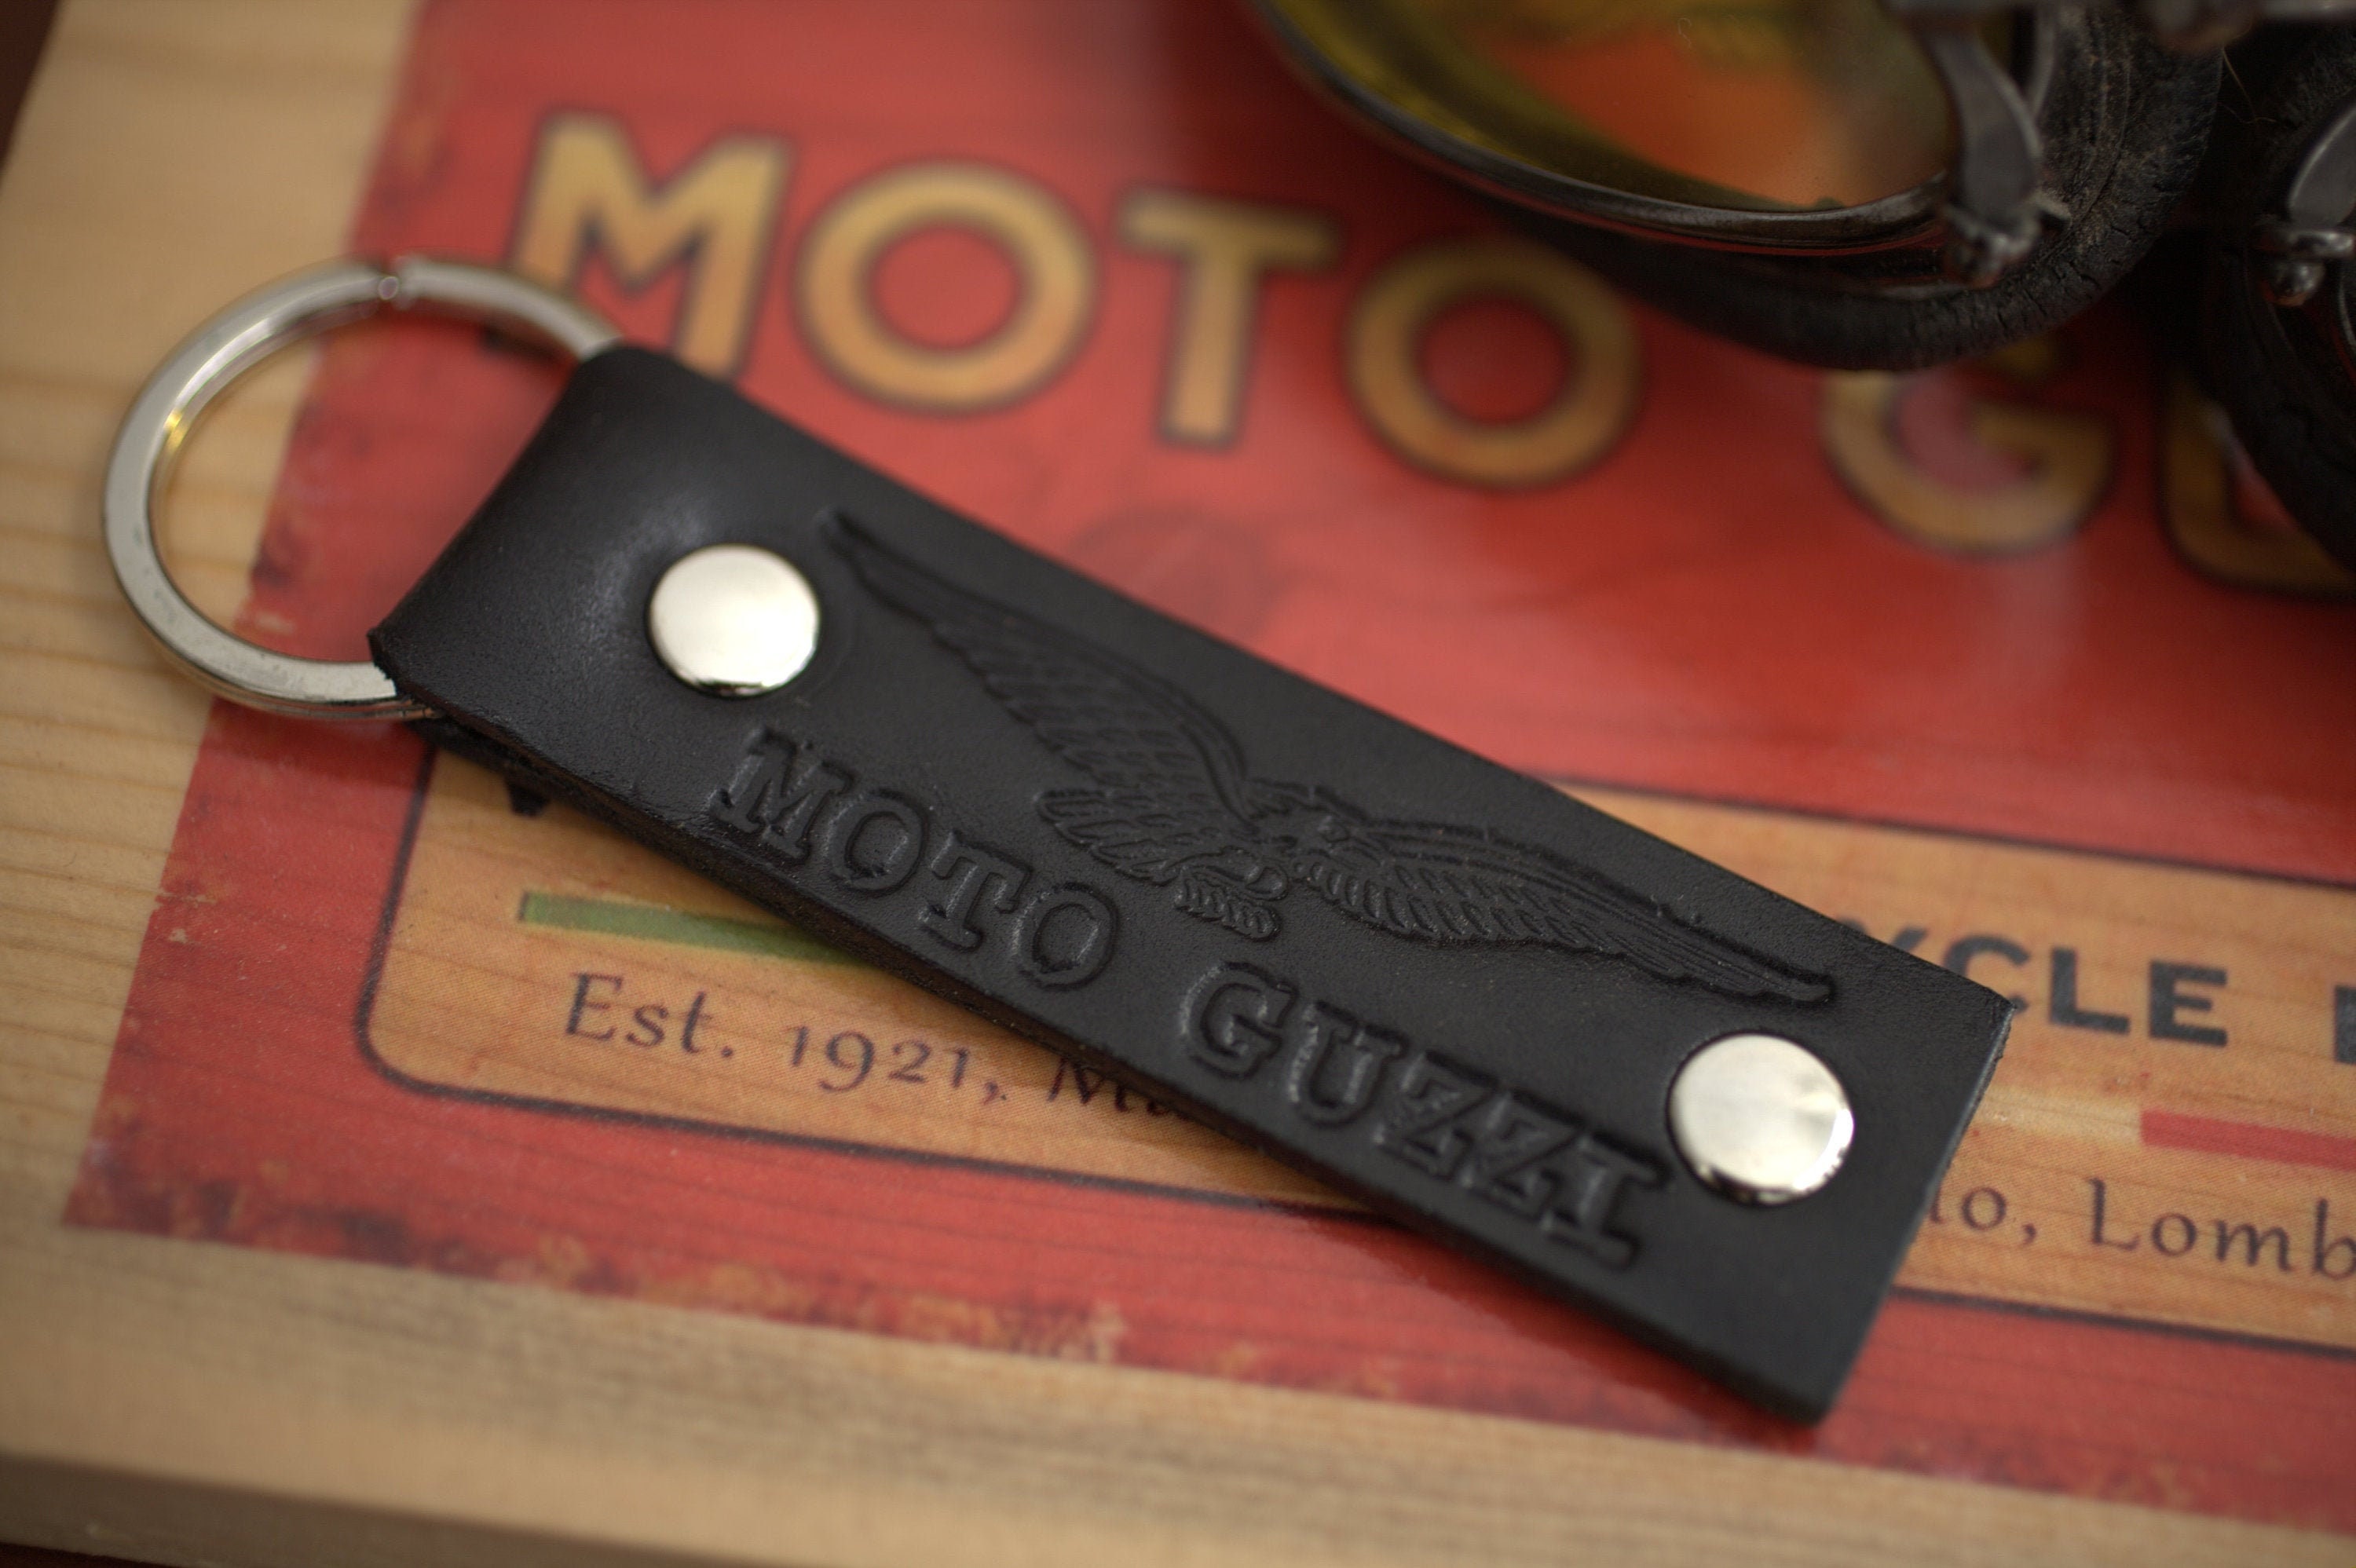 Porte Clés Cuir Moto Guzzi 606375M en vente chez Moto Bel